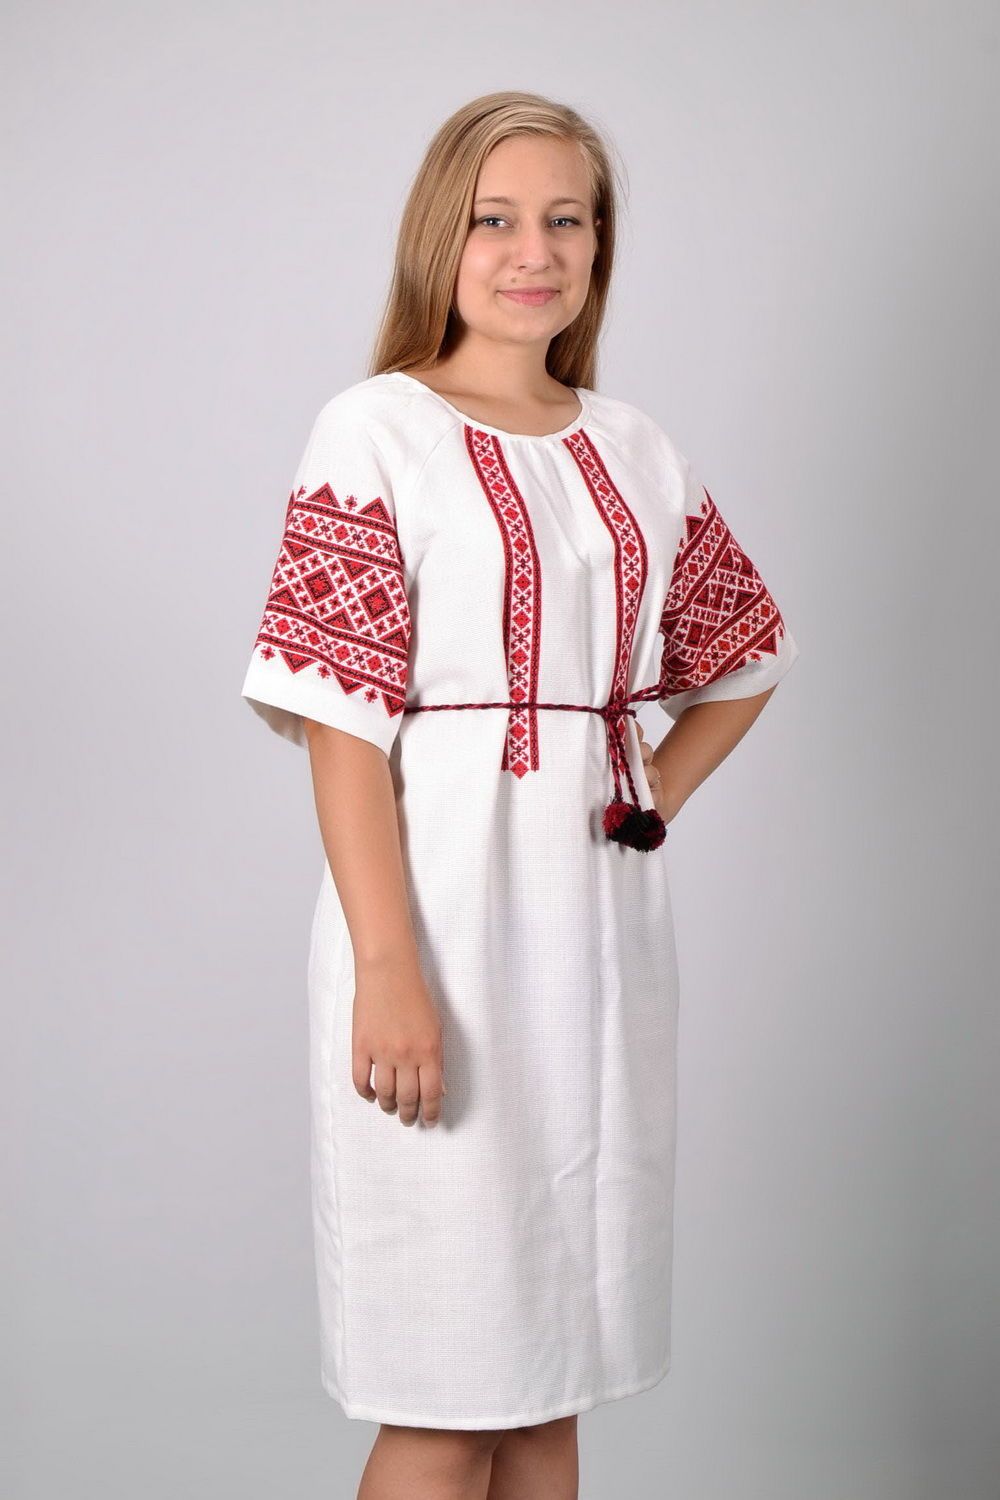 Robe ethnique en coton avec broderie photo 5